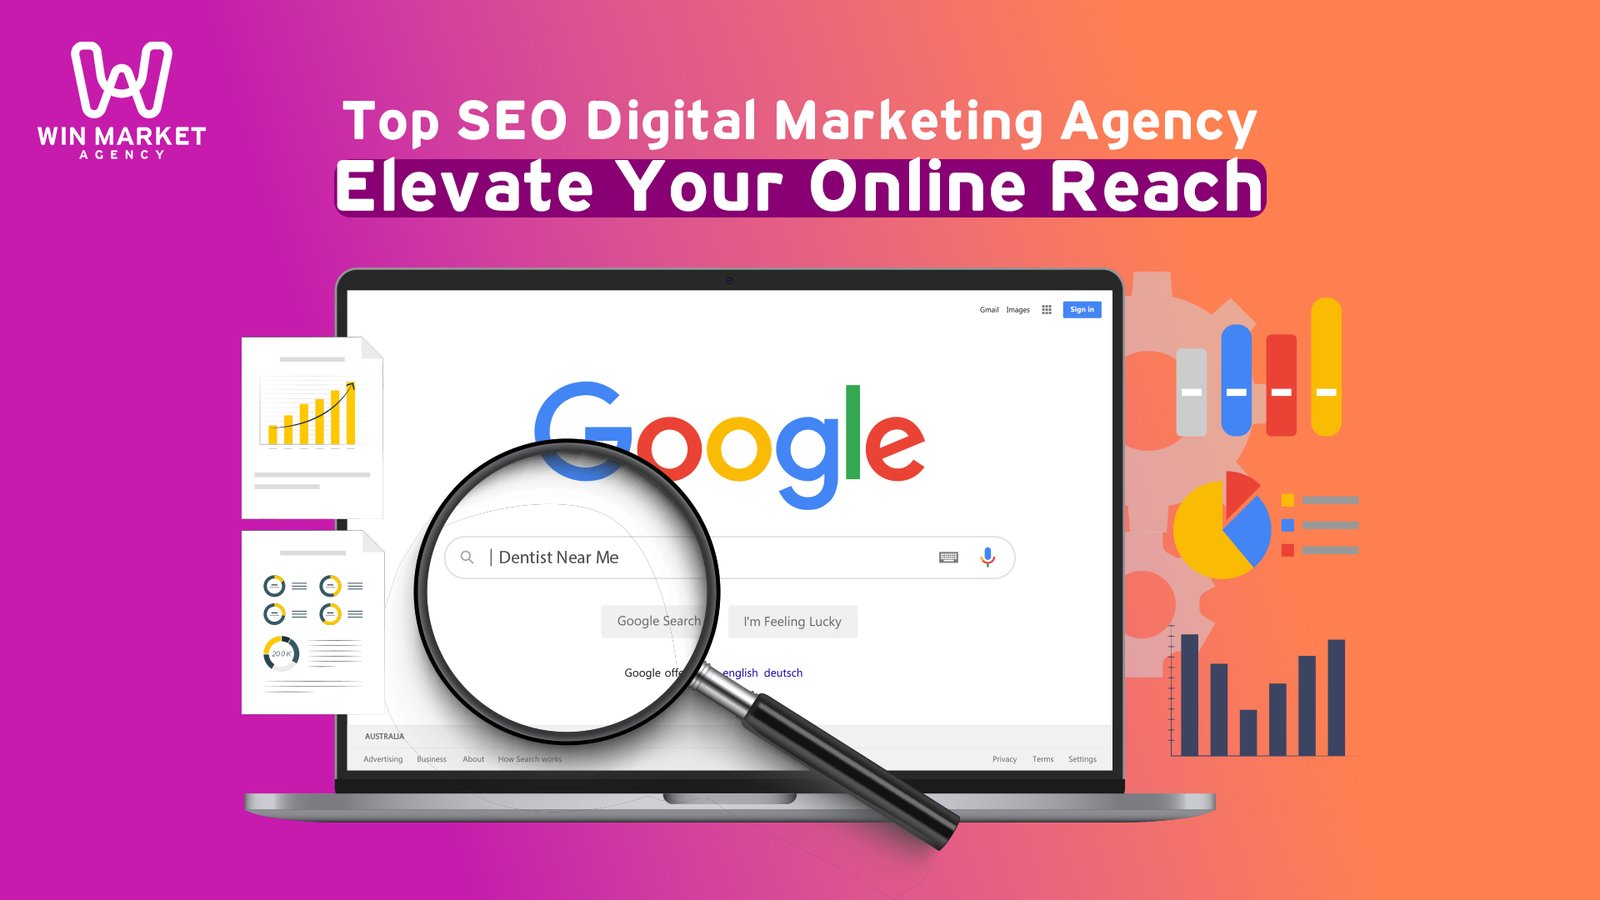 Top SEO Digital Marketing Agency: Elevate Your Online Reach